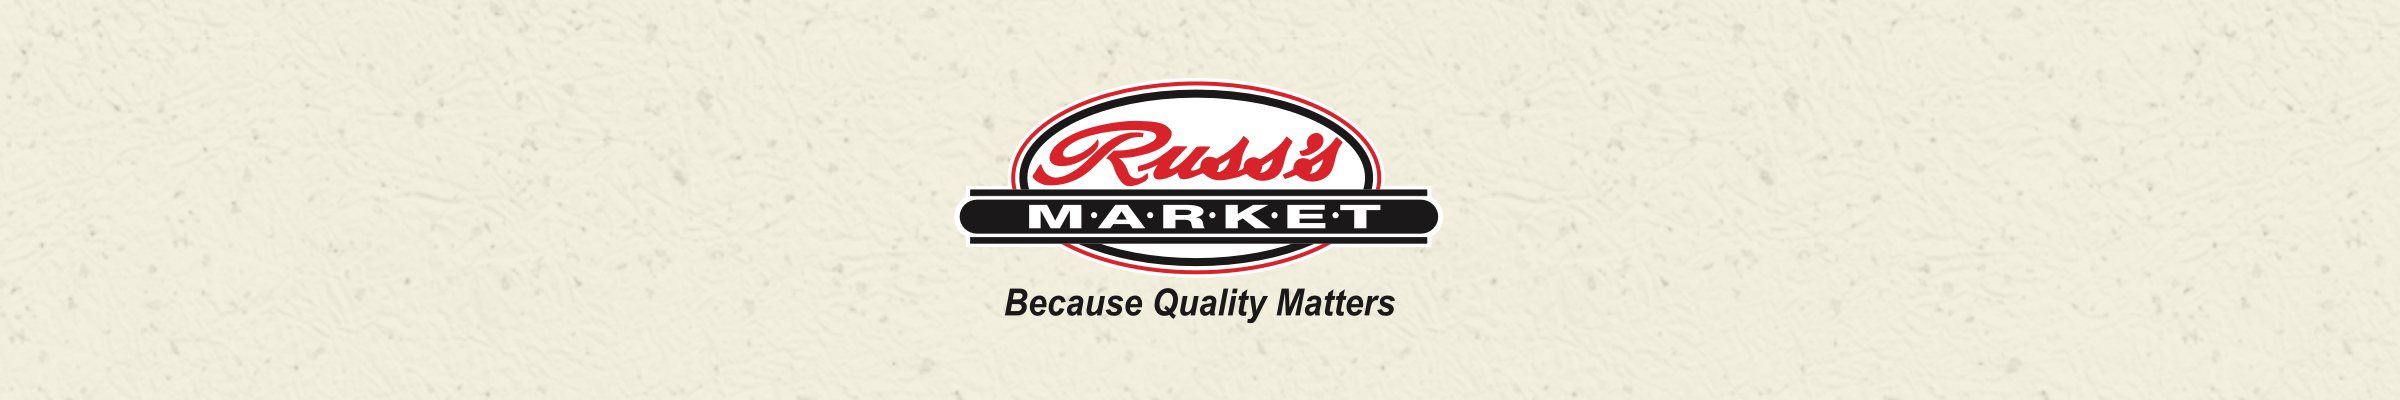 Russ's Market - Hastings